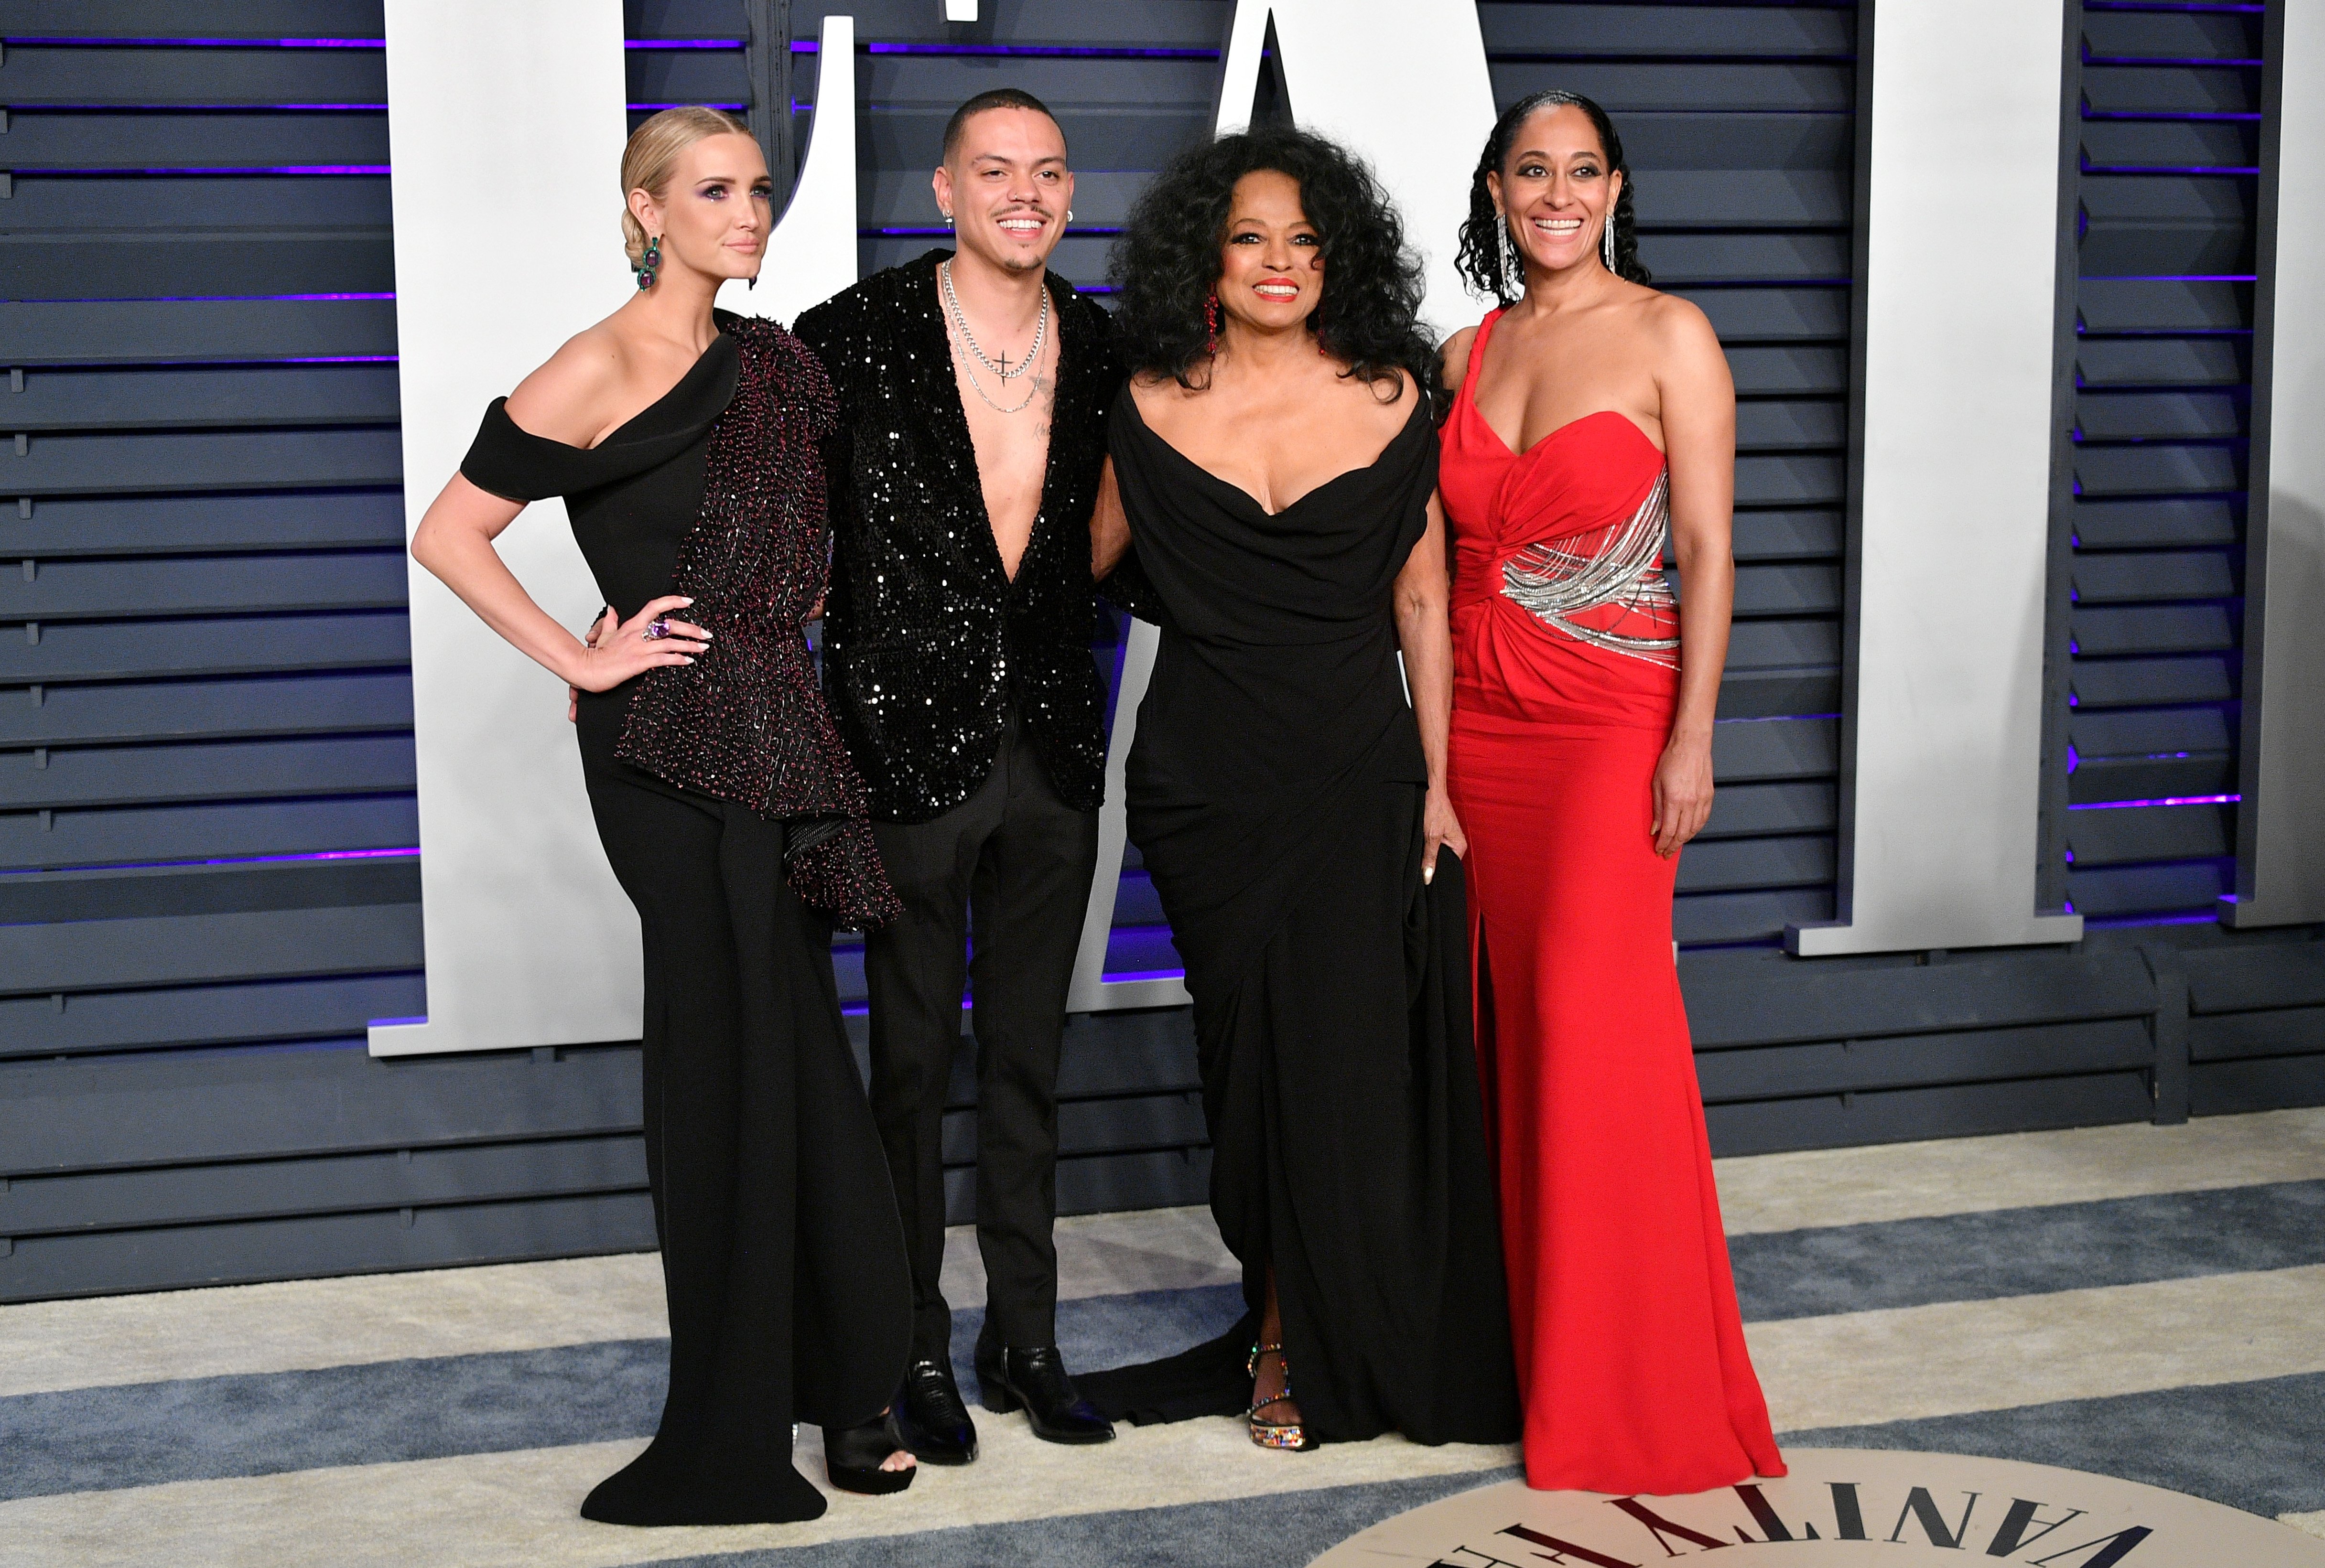 Ashlee Simpson, Evan Ross, Diana Ross und Tracee Ellis Ross bei der 2019 Vanity Fair Oscar Party | Quelle: Getty Images